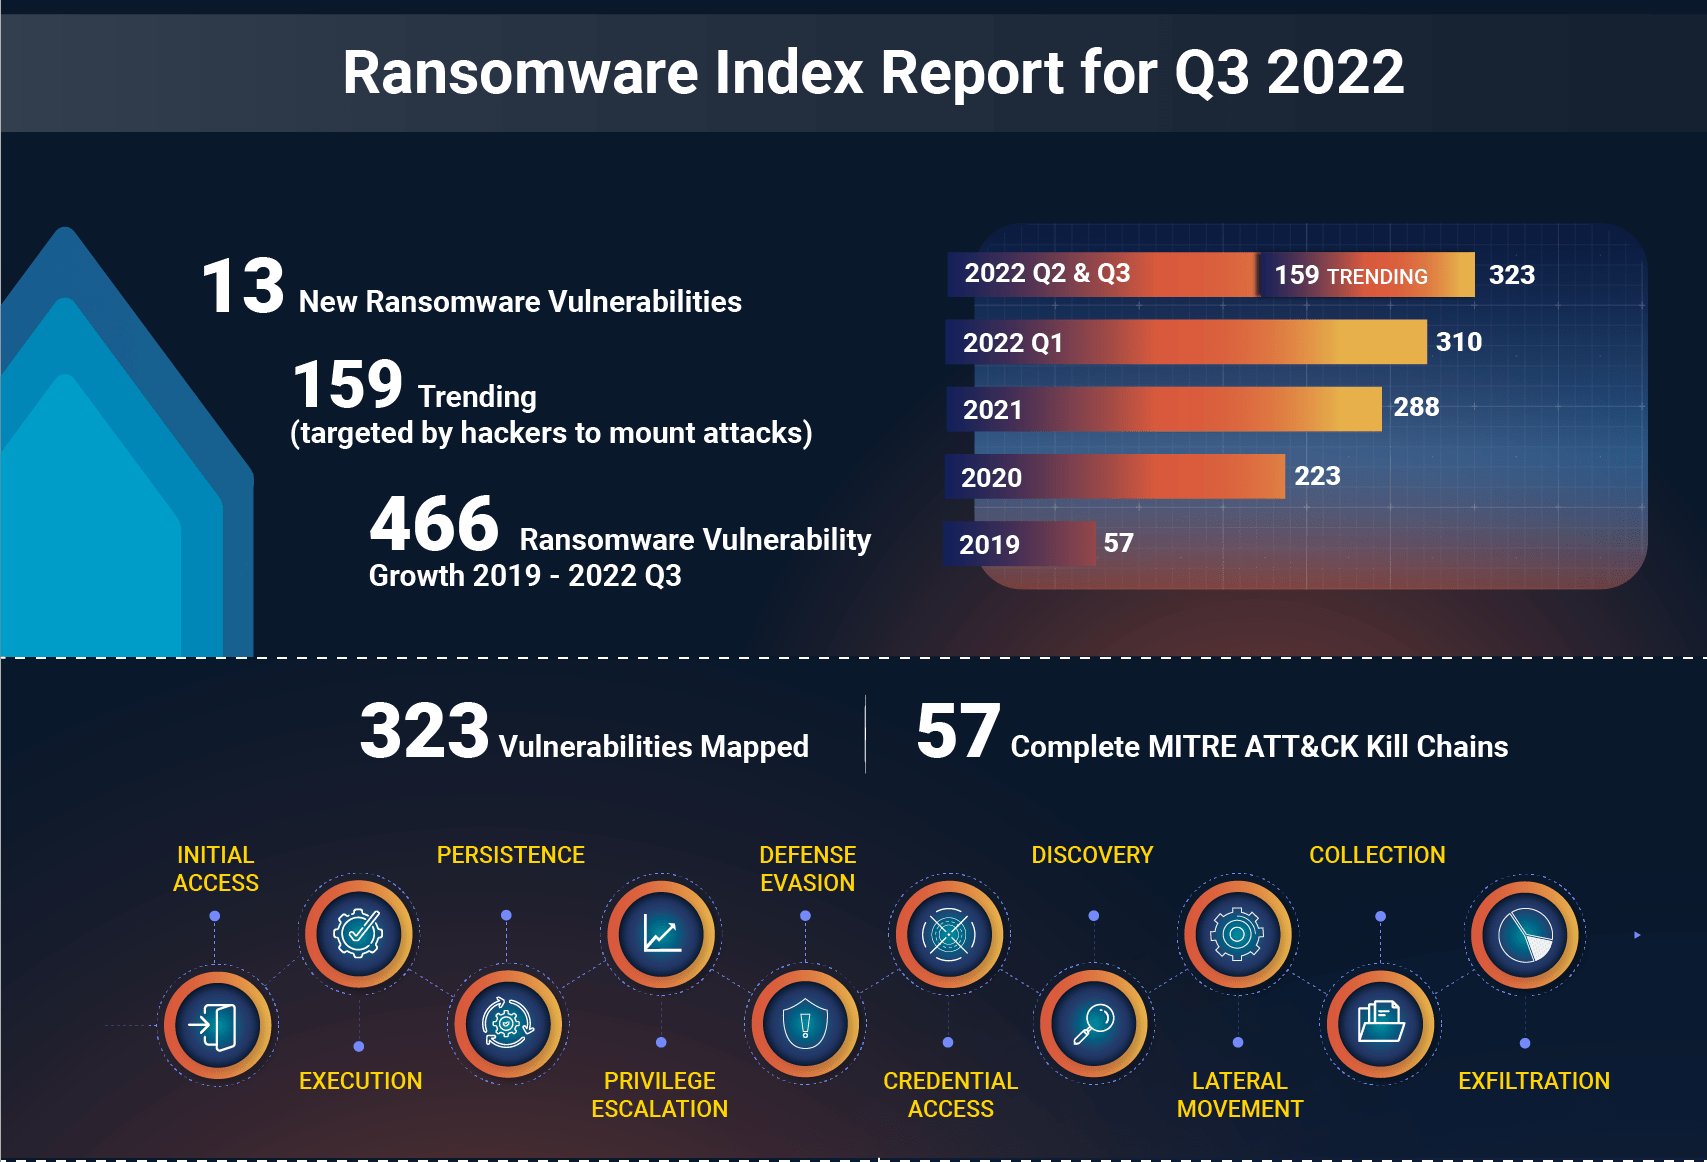 ransomware case study 2022